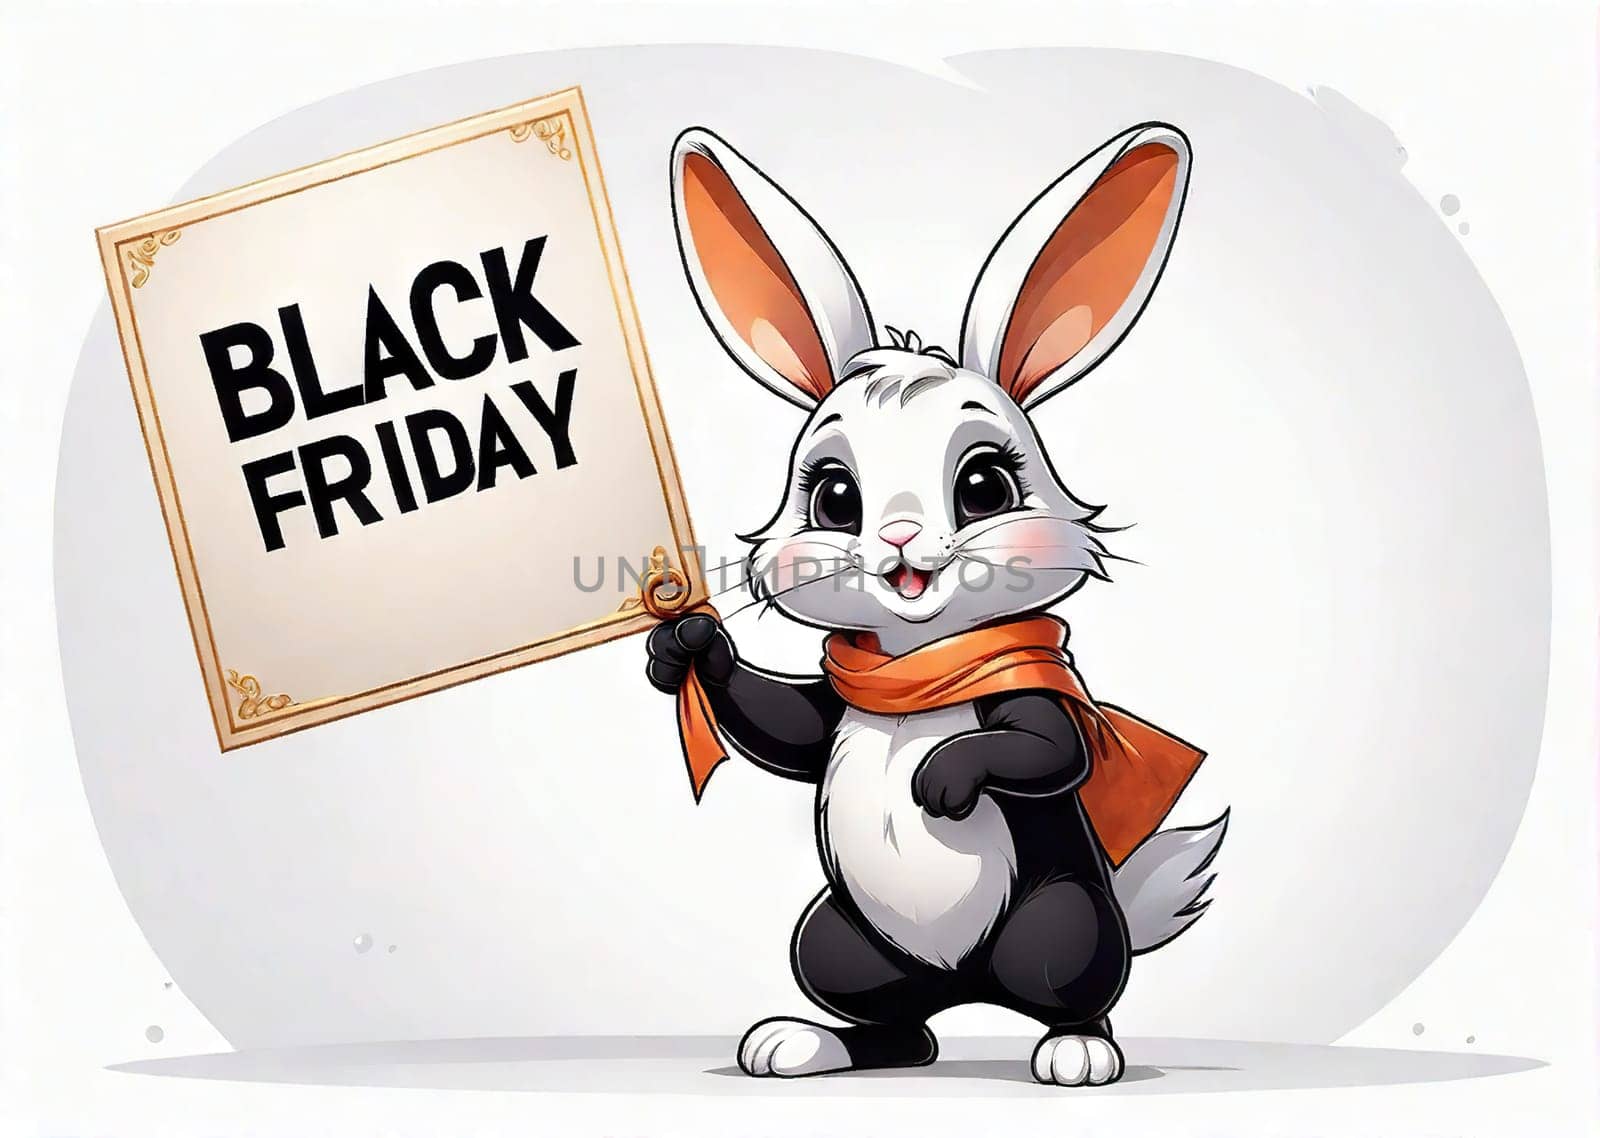 Cute bunny with banner that says Black Friday, concept seasonal discounts by EkaterinaPereslavtseva